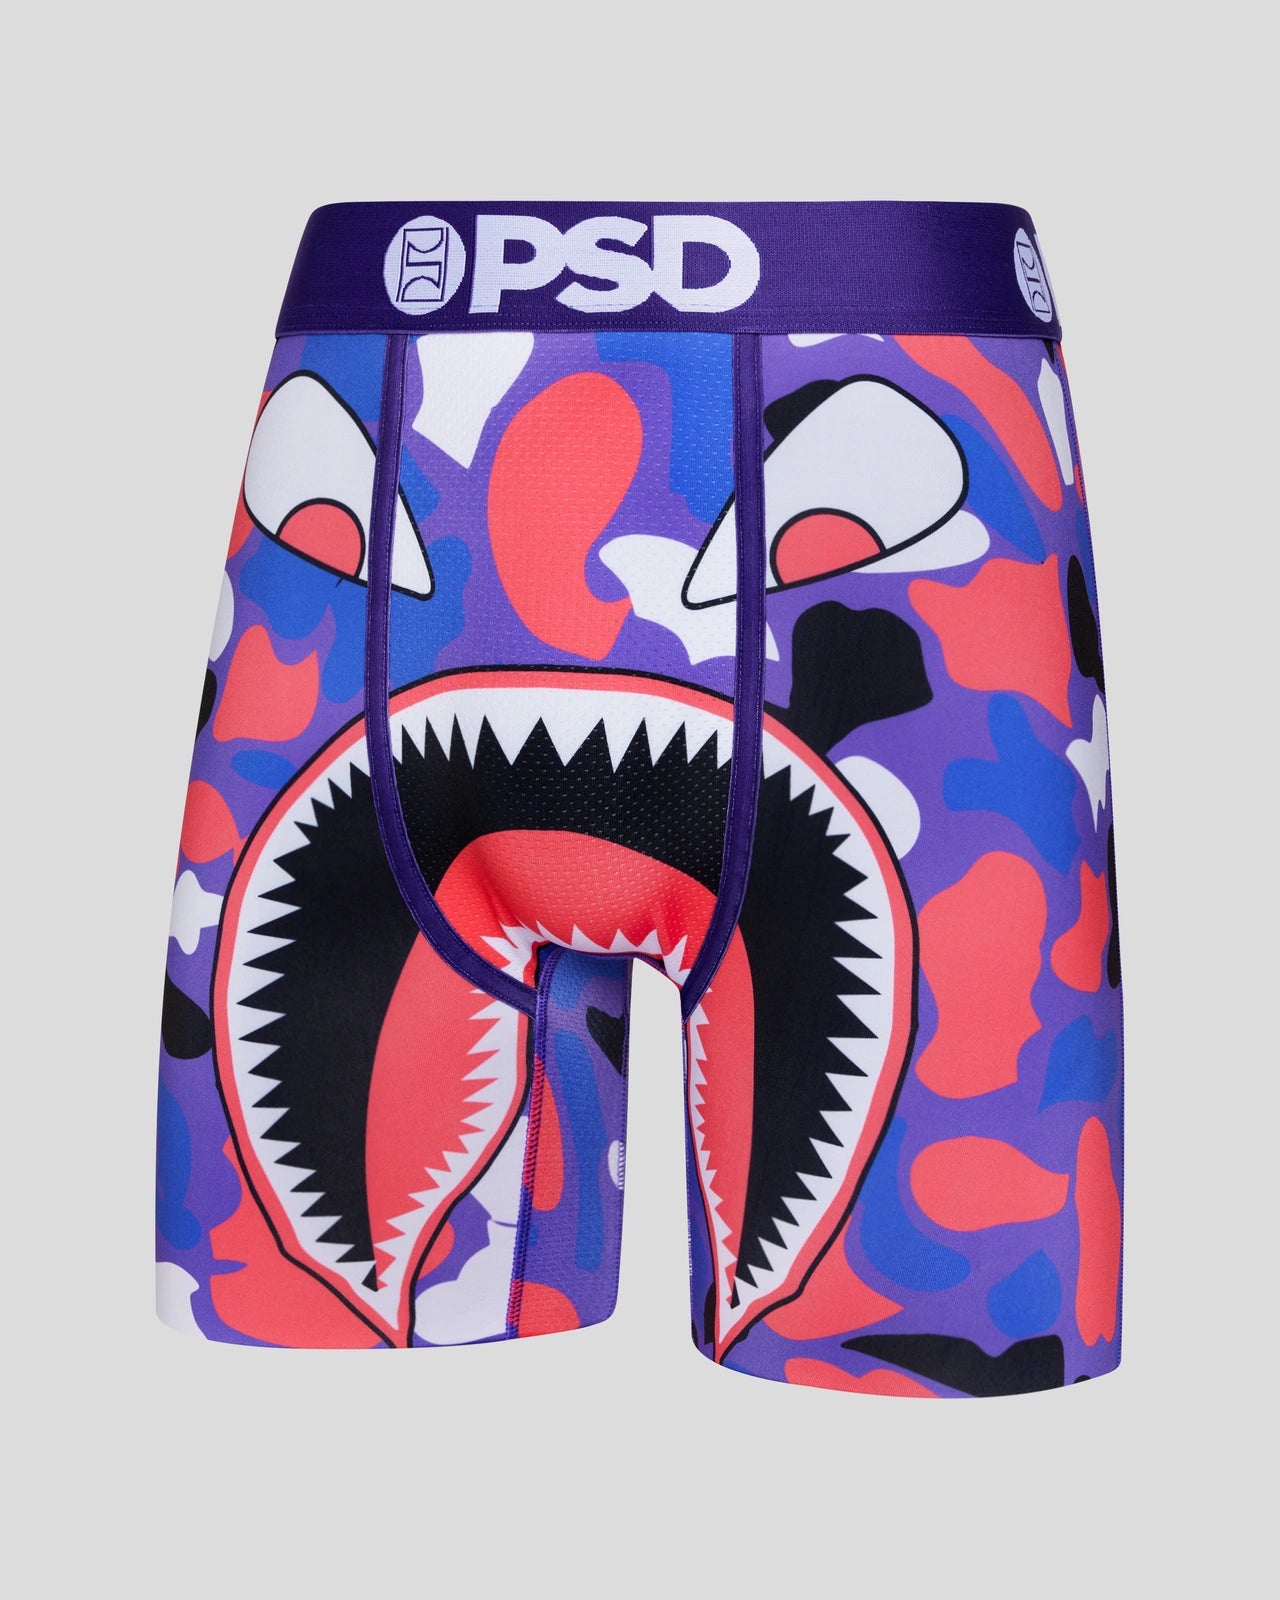 PSD Underwear Boxer Briefs - Warface Keep It 100, psd 